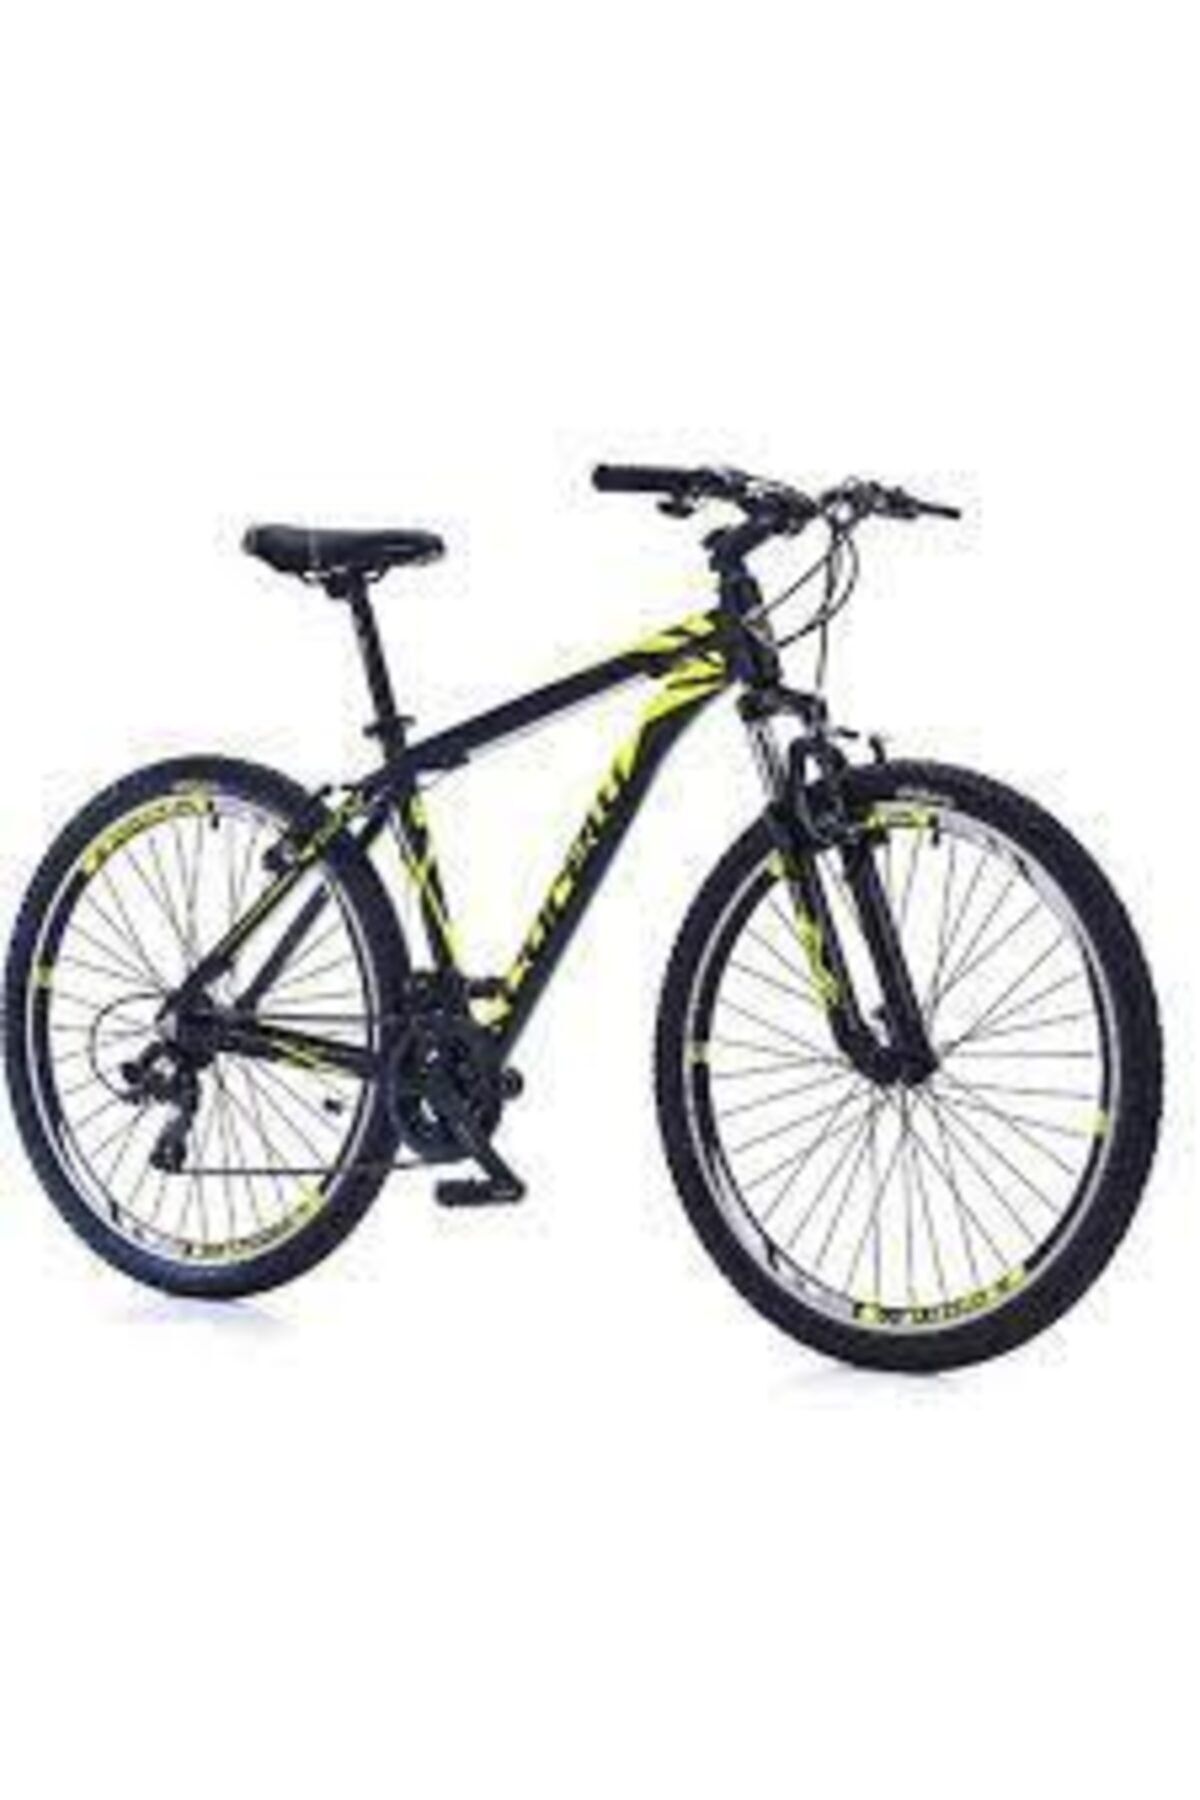 Corelli Snoop 3.0 Erkek Dağ Bisikleti V 382h 26 Jant 21 Vites Siyah Neon Sarı